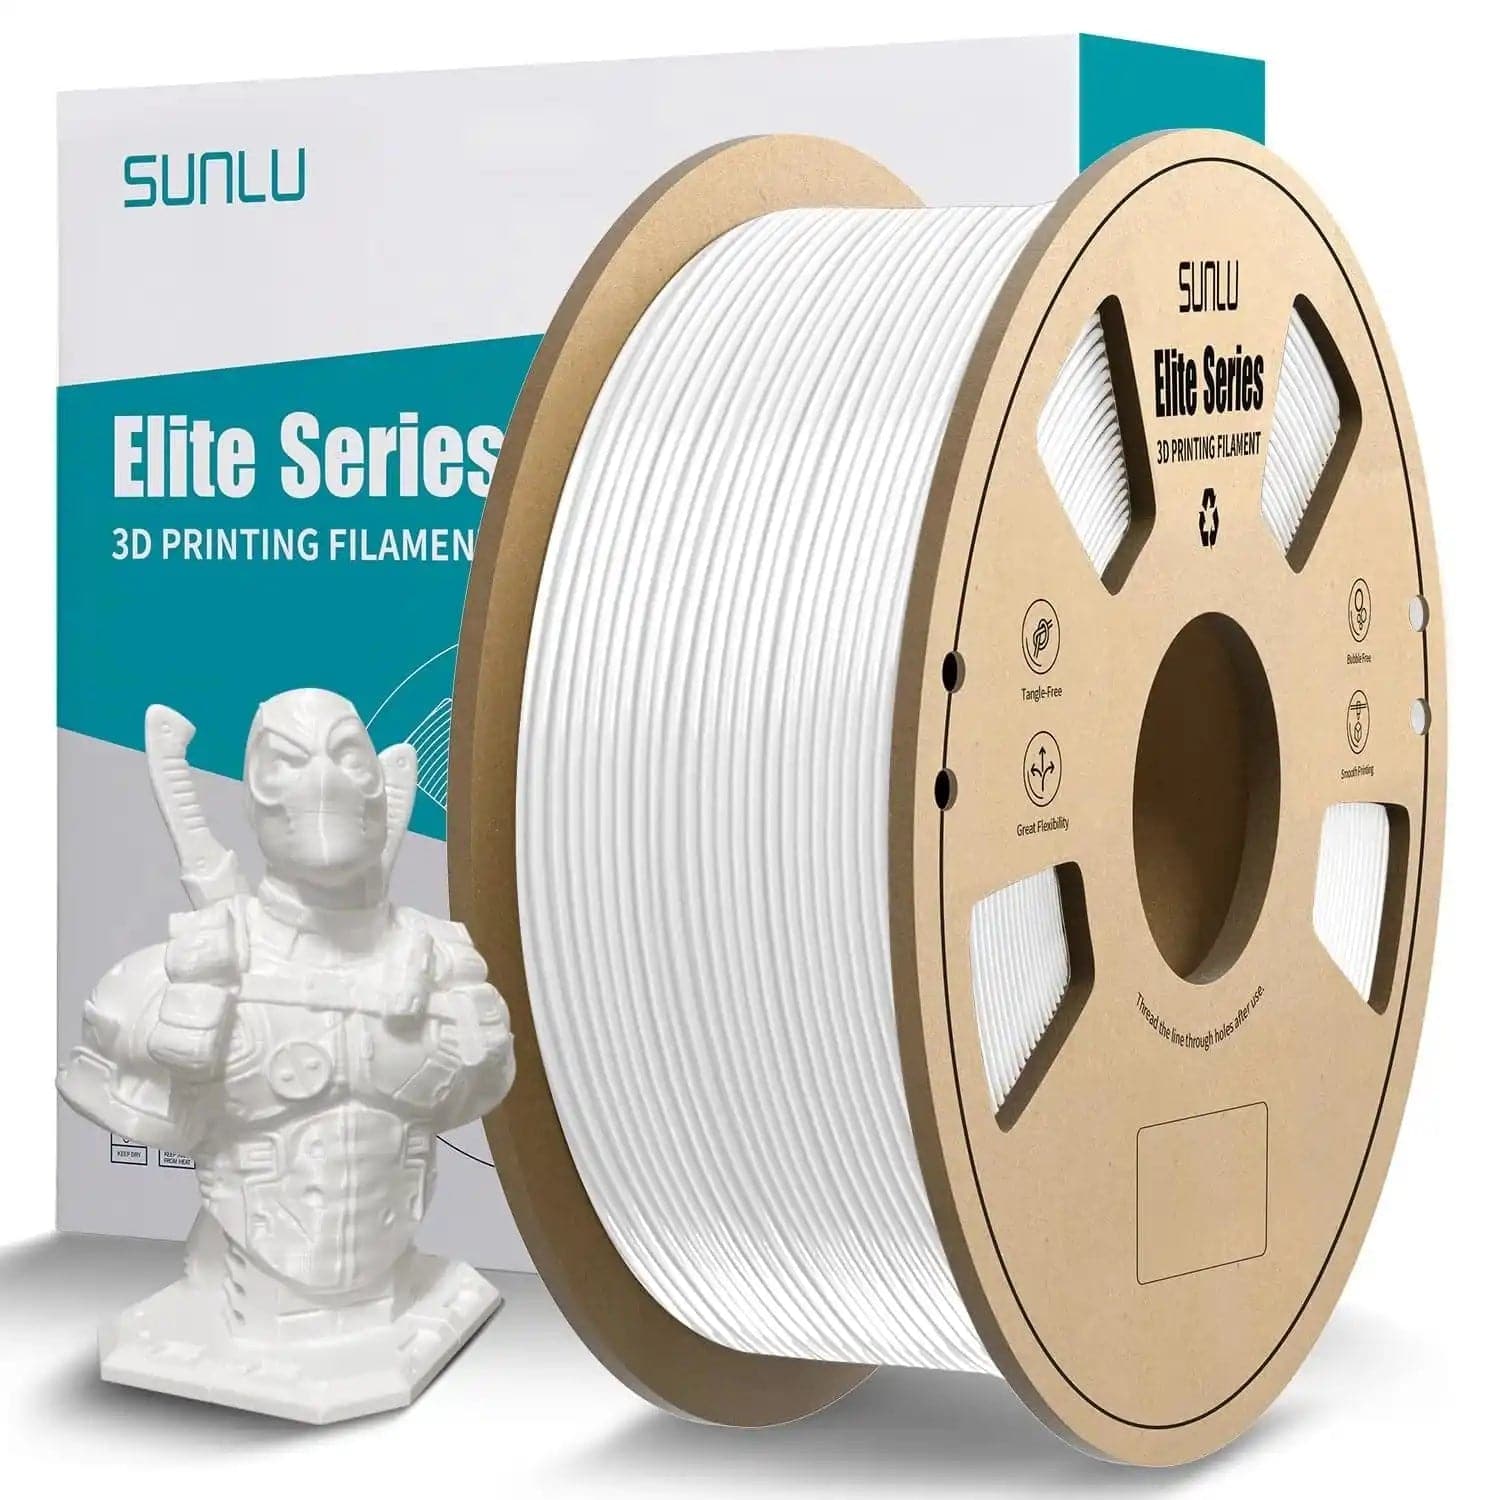 SUNLU PETG 3D Printer Filament 1.75mm PETG 1KG/ROLL ±0.02mm Multicolor No  Bubble